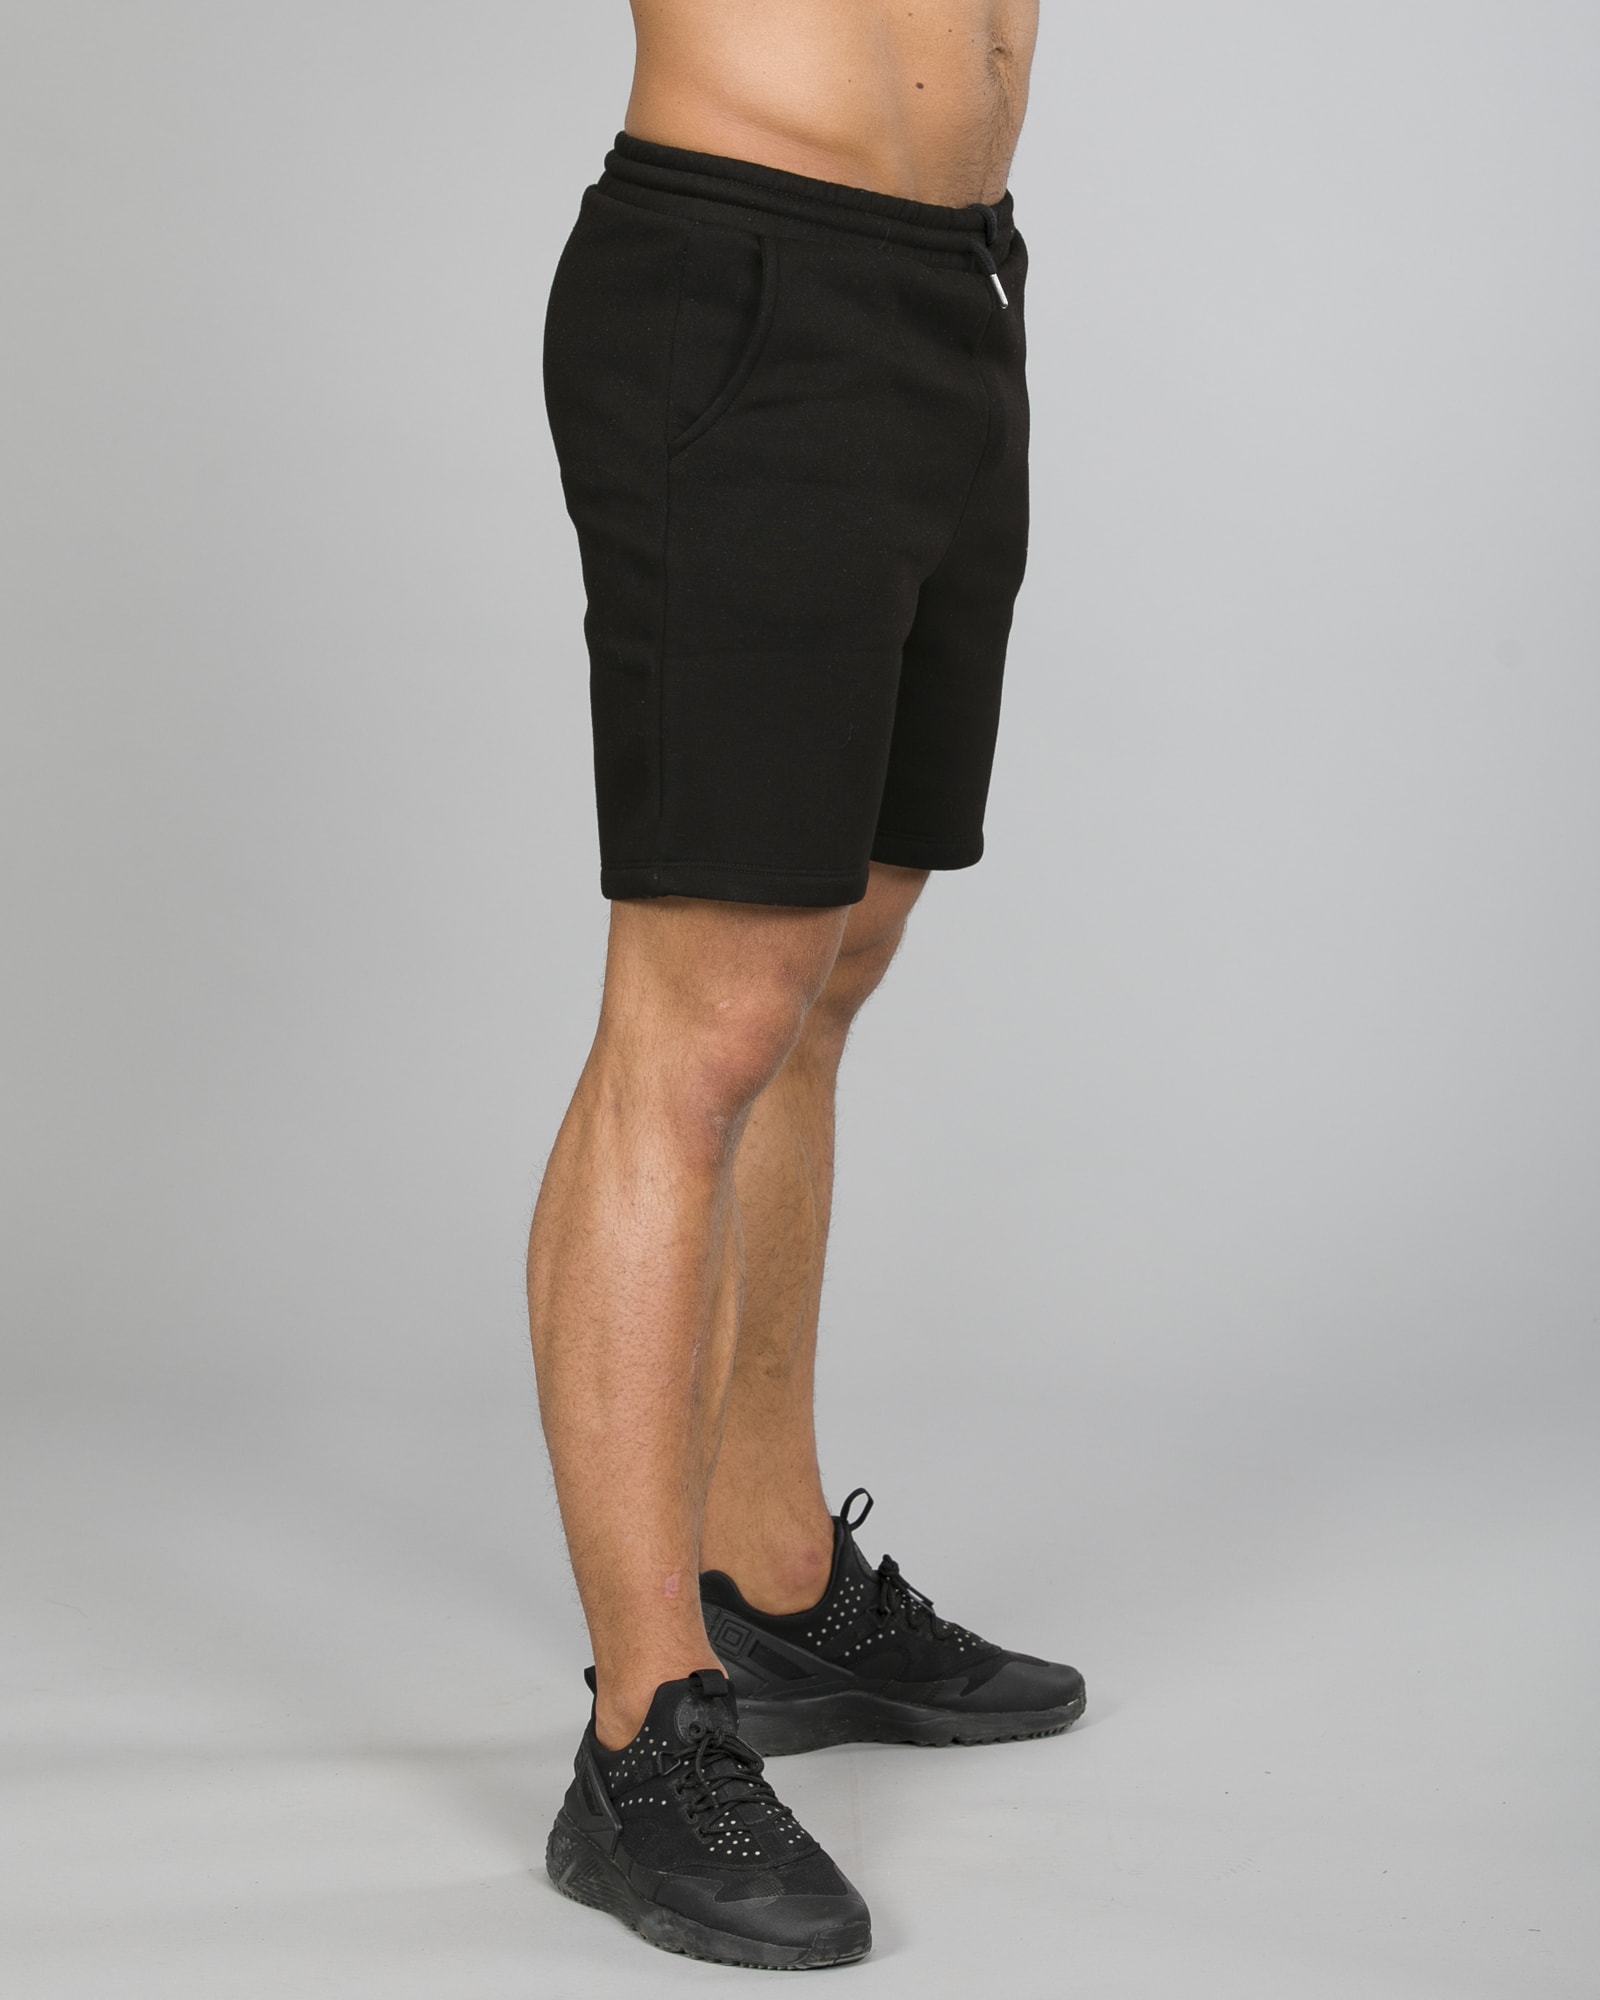 Crest Shorts ss18336b Black b